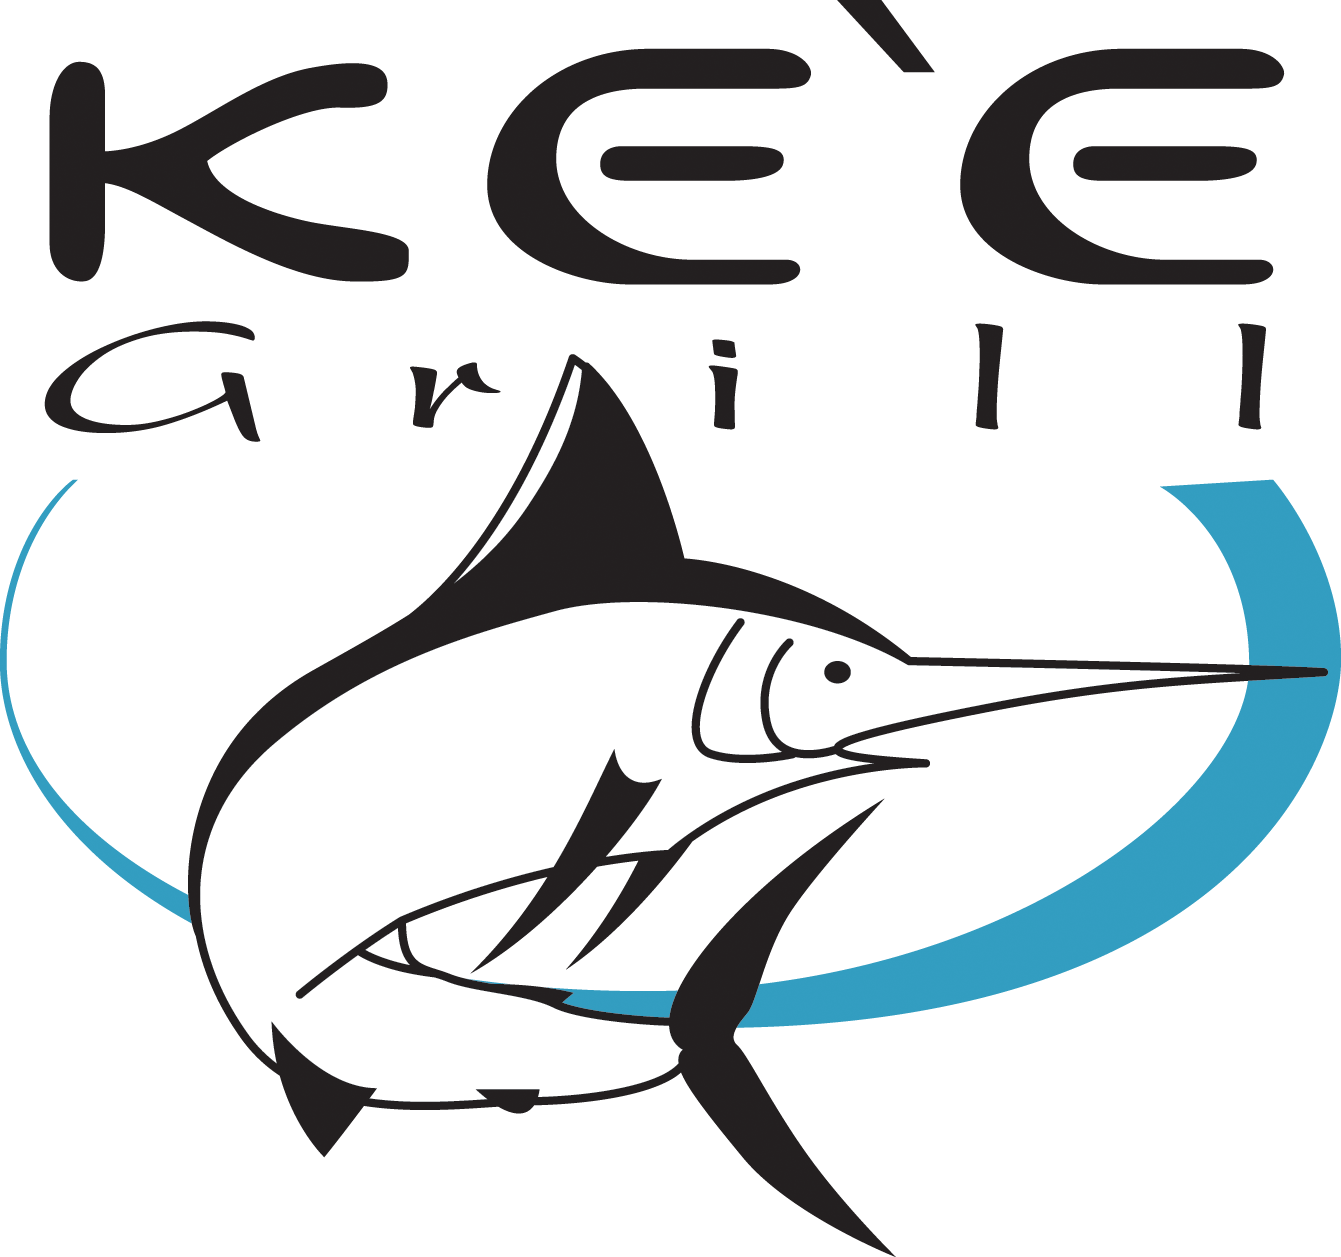 ke'e grill logo with marlin drawing